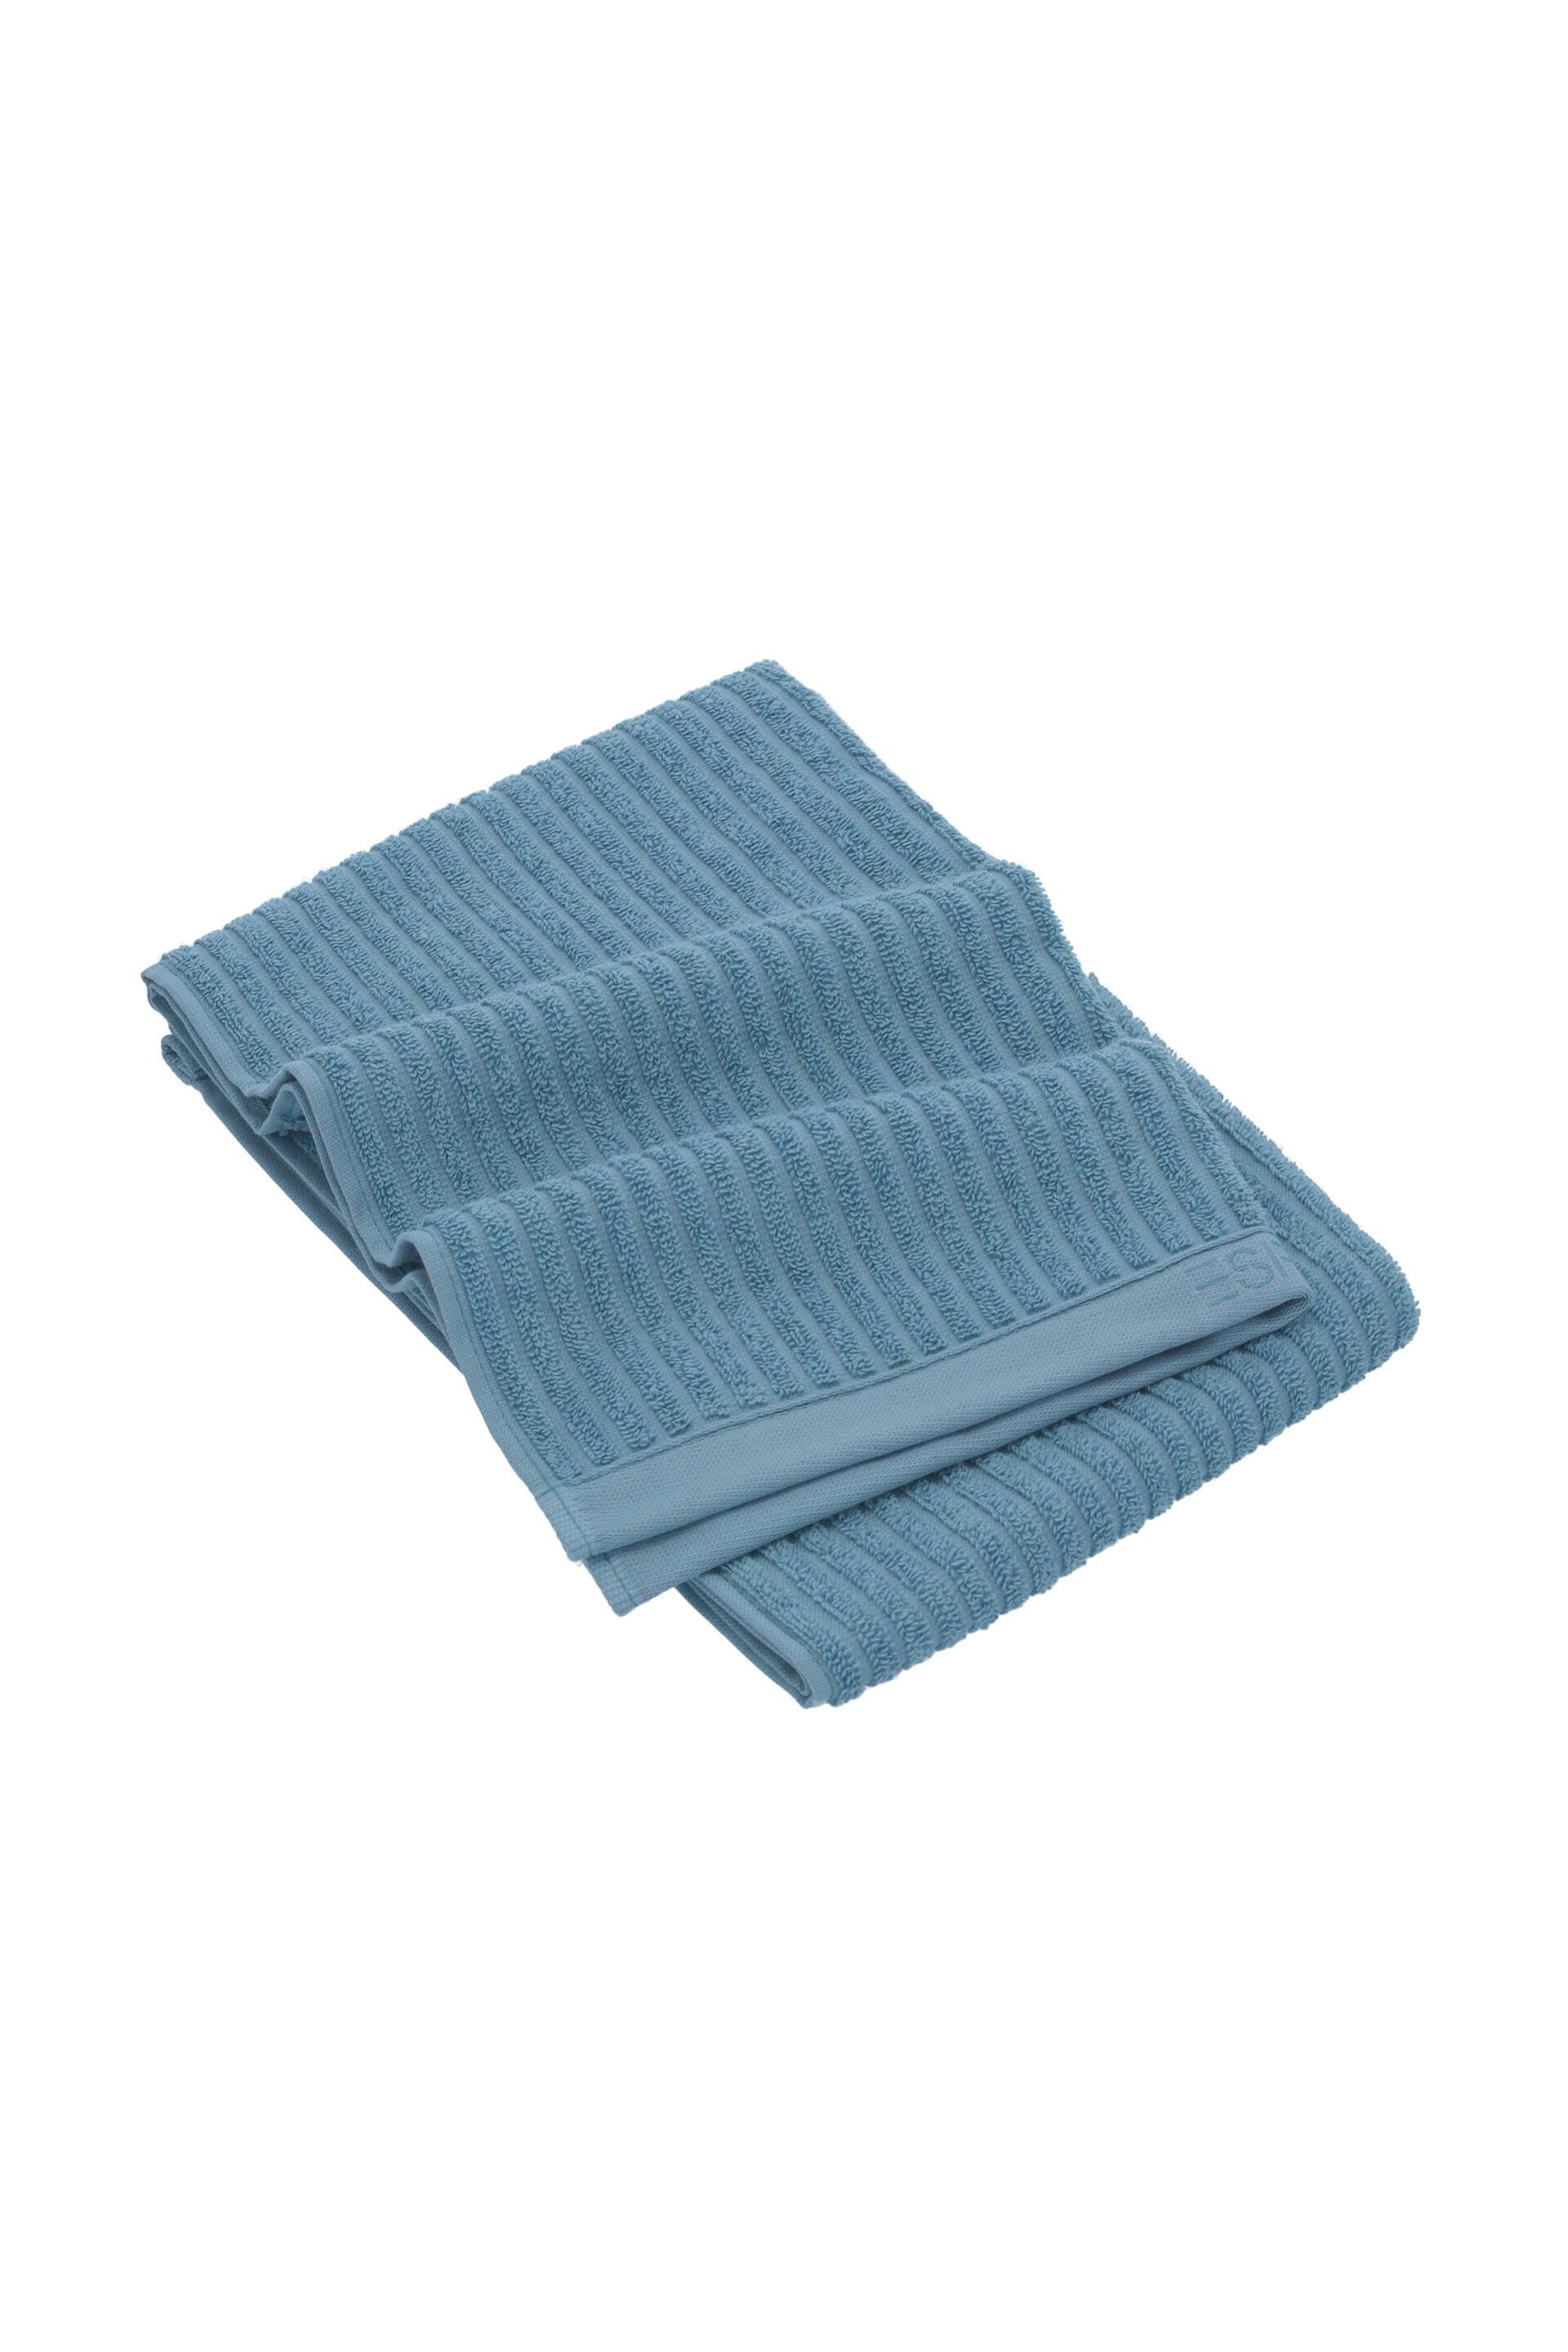 Esprit lines hand towel Modern